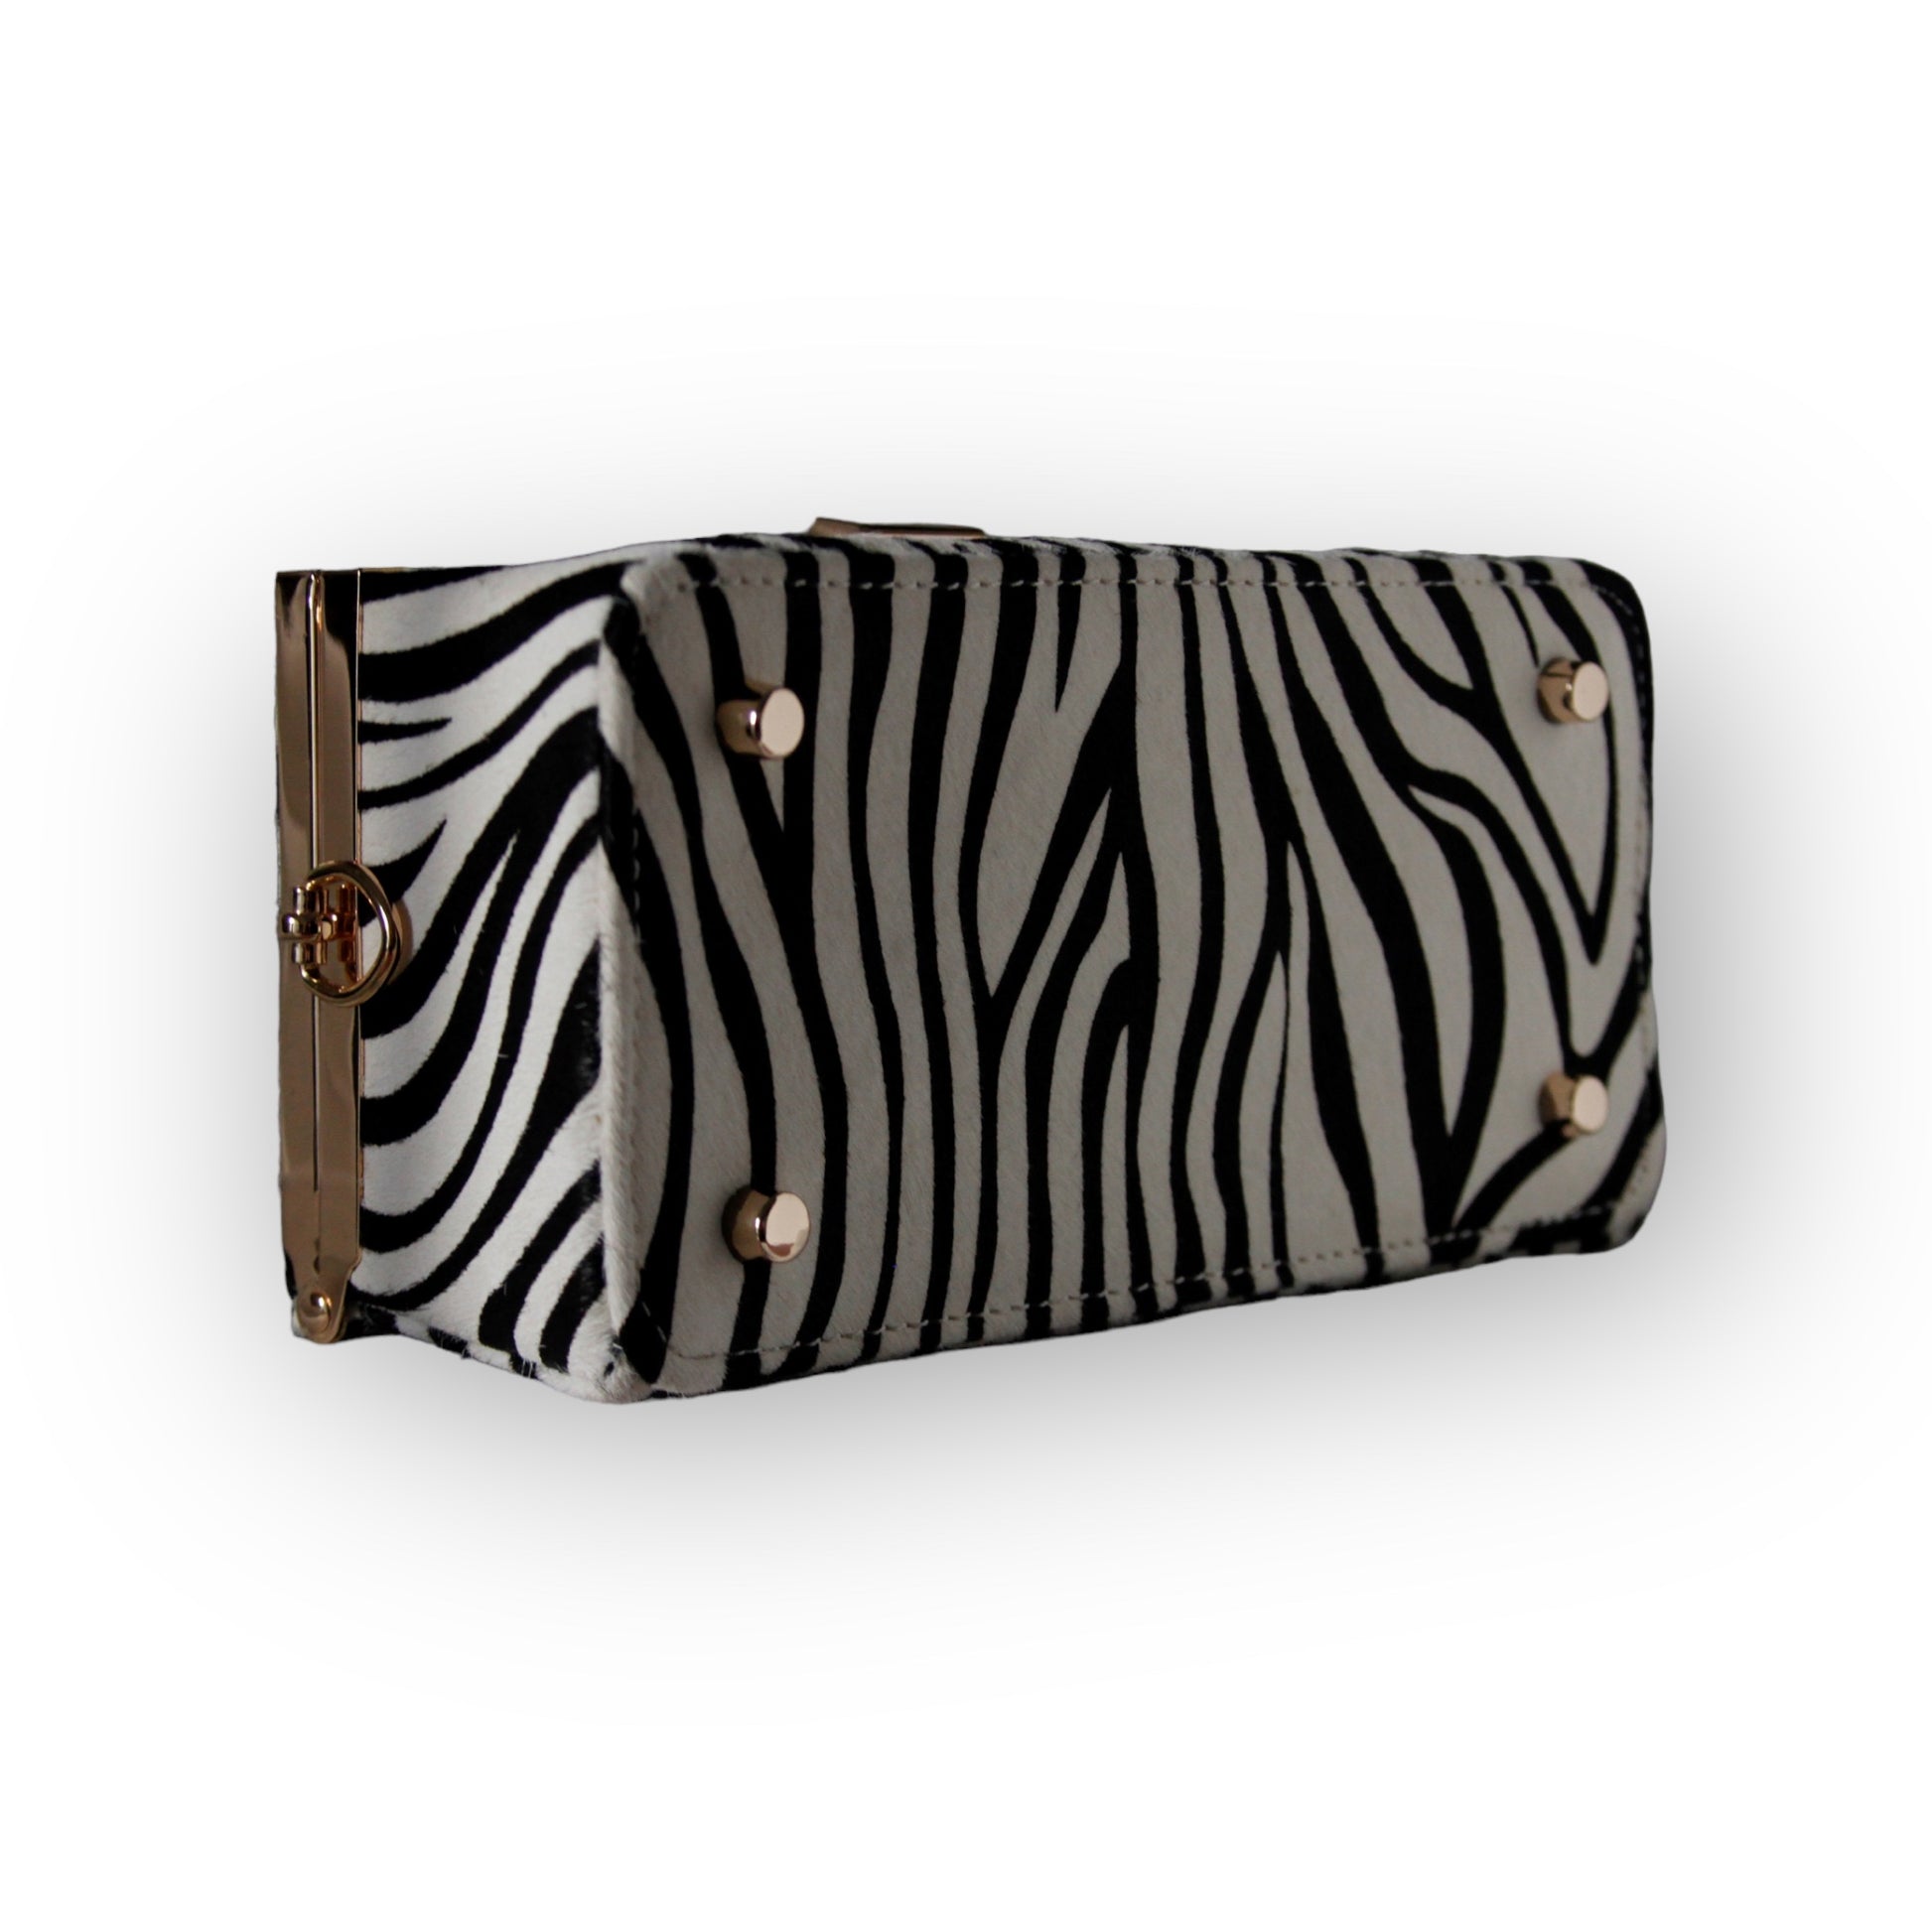 Red Leather Leopard Print Bag - Chloe - On Sale – Sassy Spirit